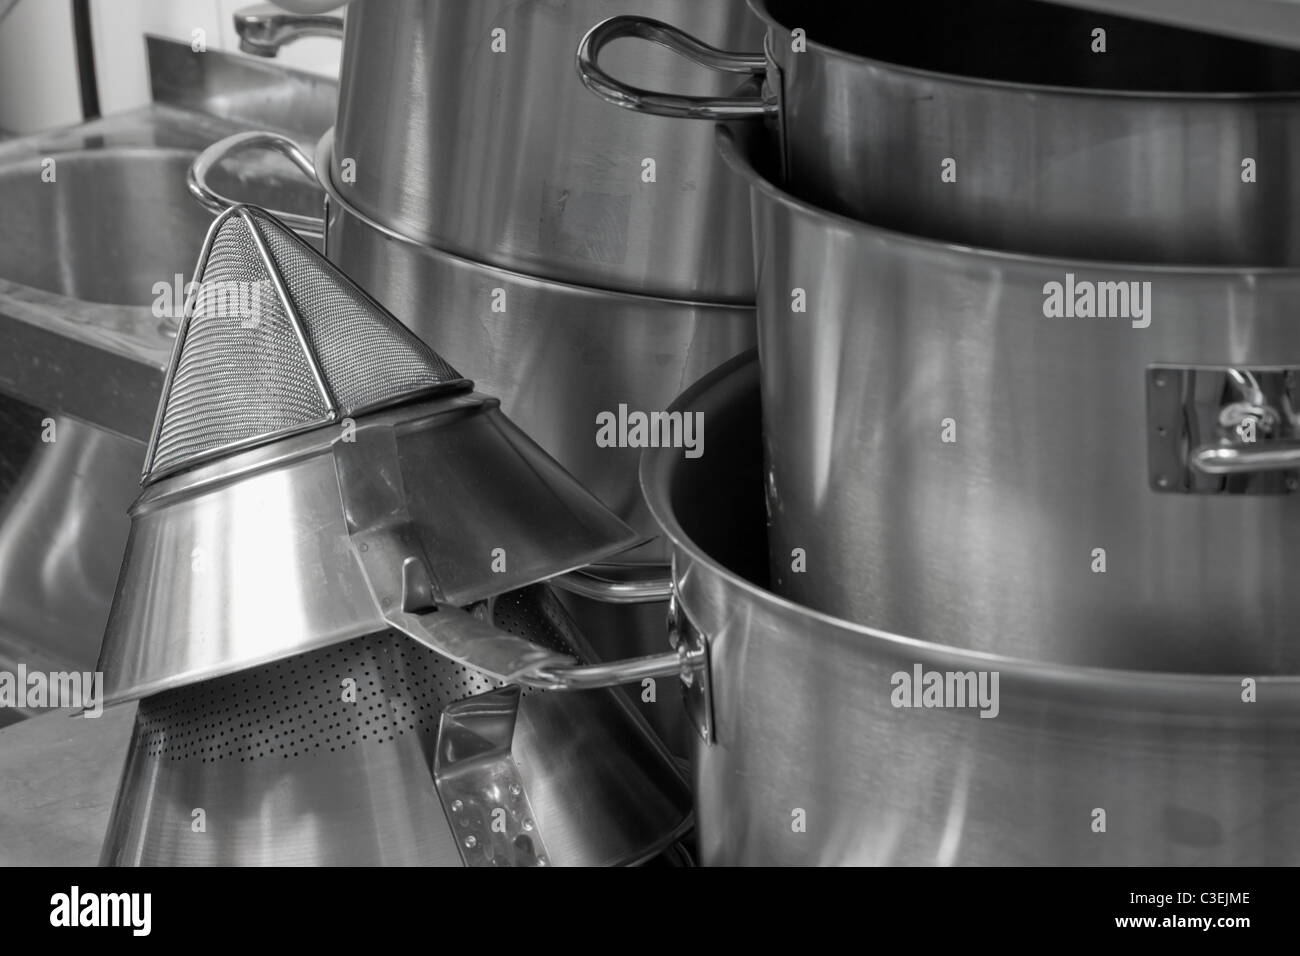 steel kitchenware Stock Photo